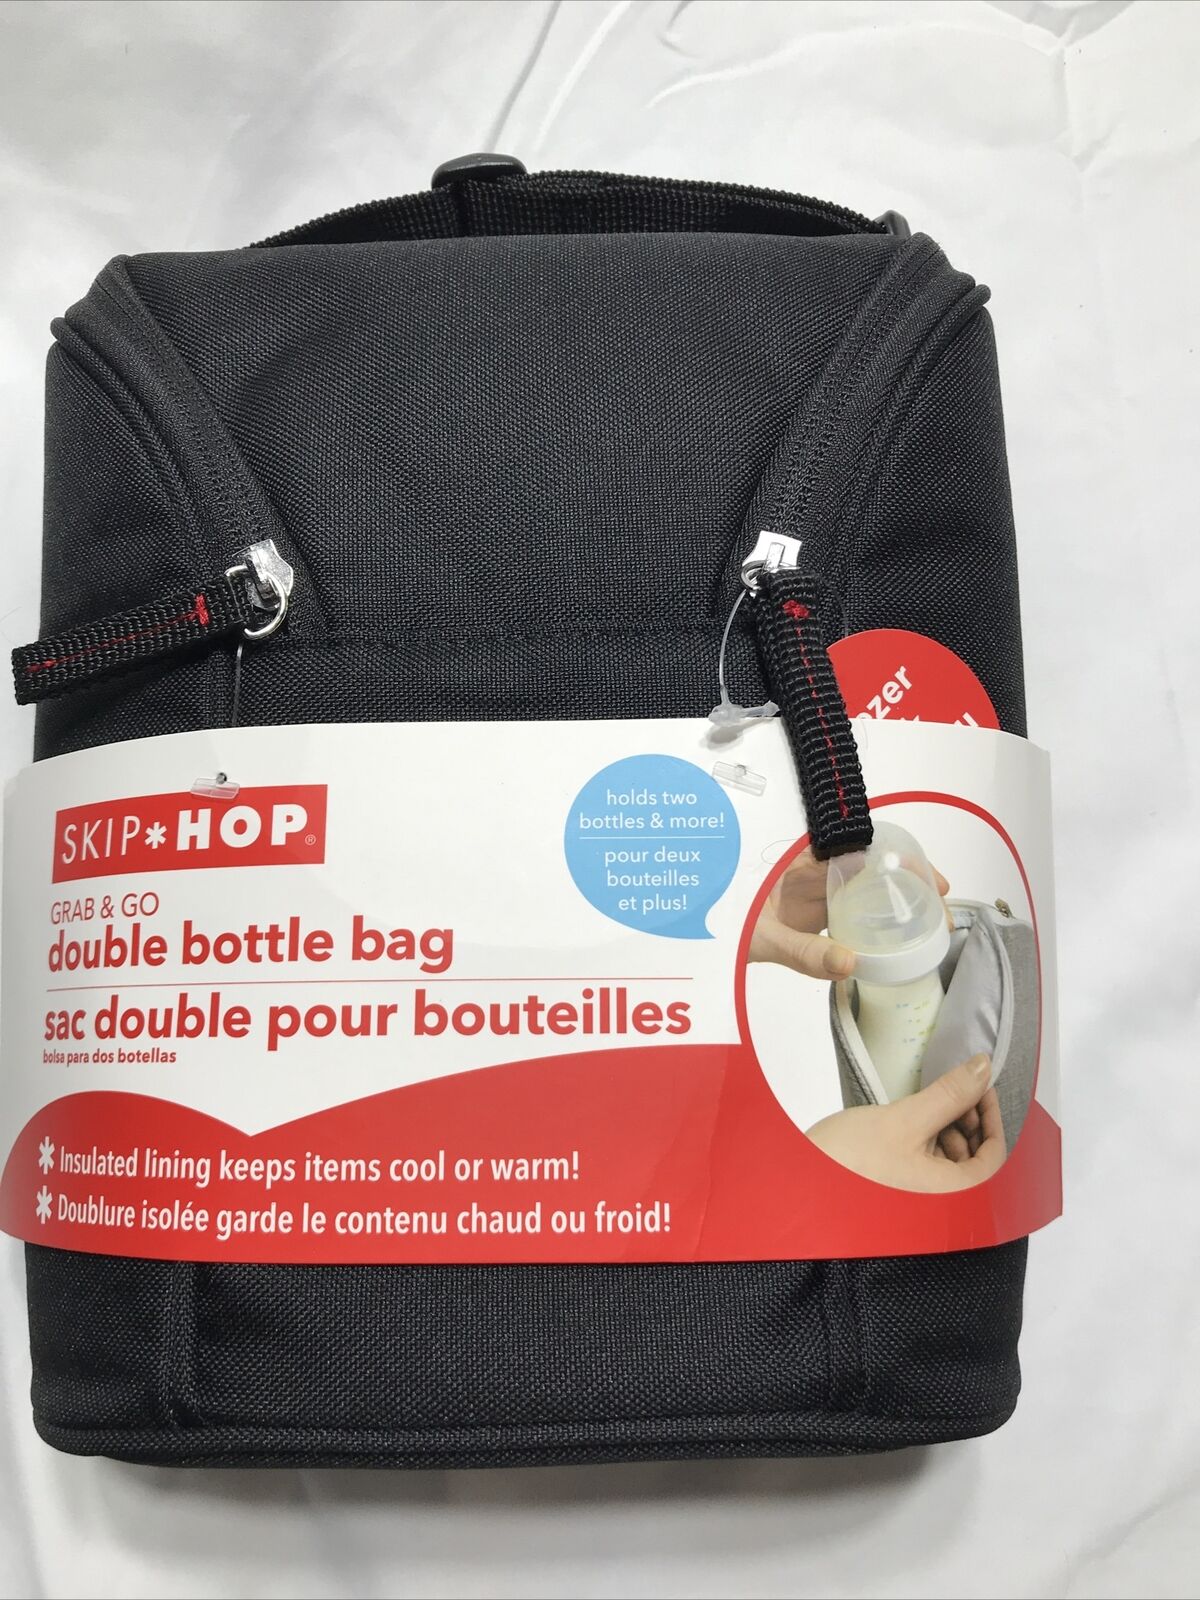 Skip & Hop Grab & Go Double Bottle Bag  Keeps Snacks Or Liquid Cool For Hours